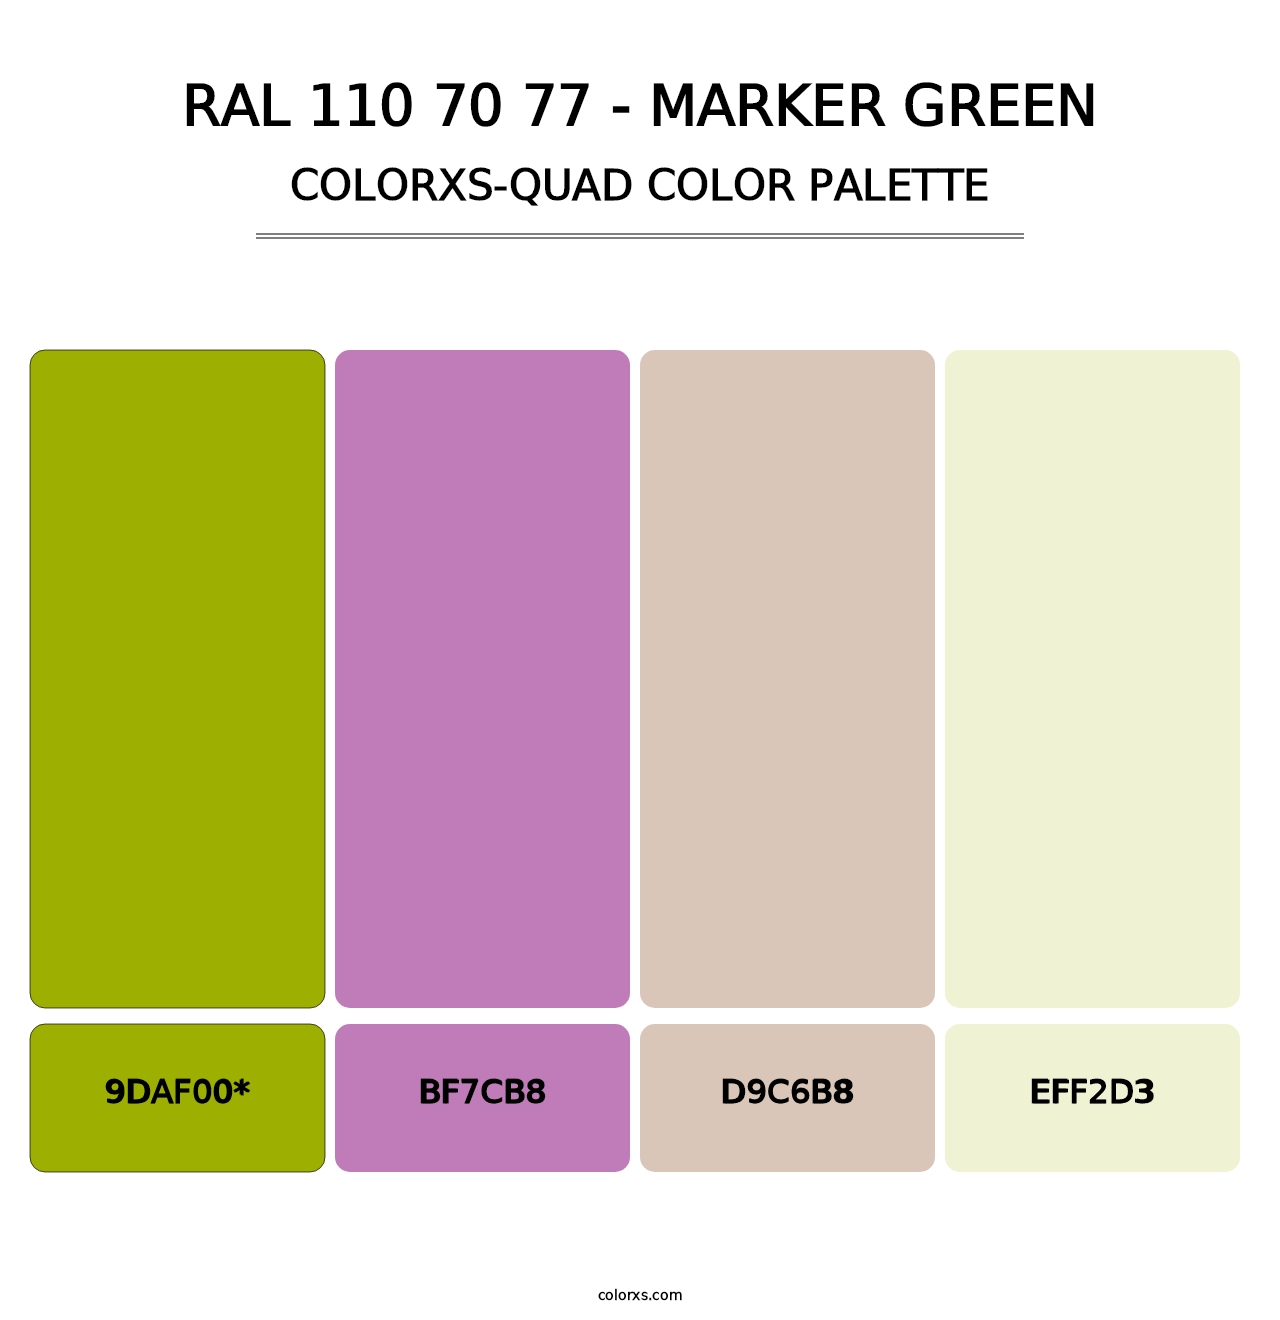 RAL 110 70 77 - Marker Green - Colorxs Quad Palette